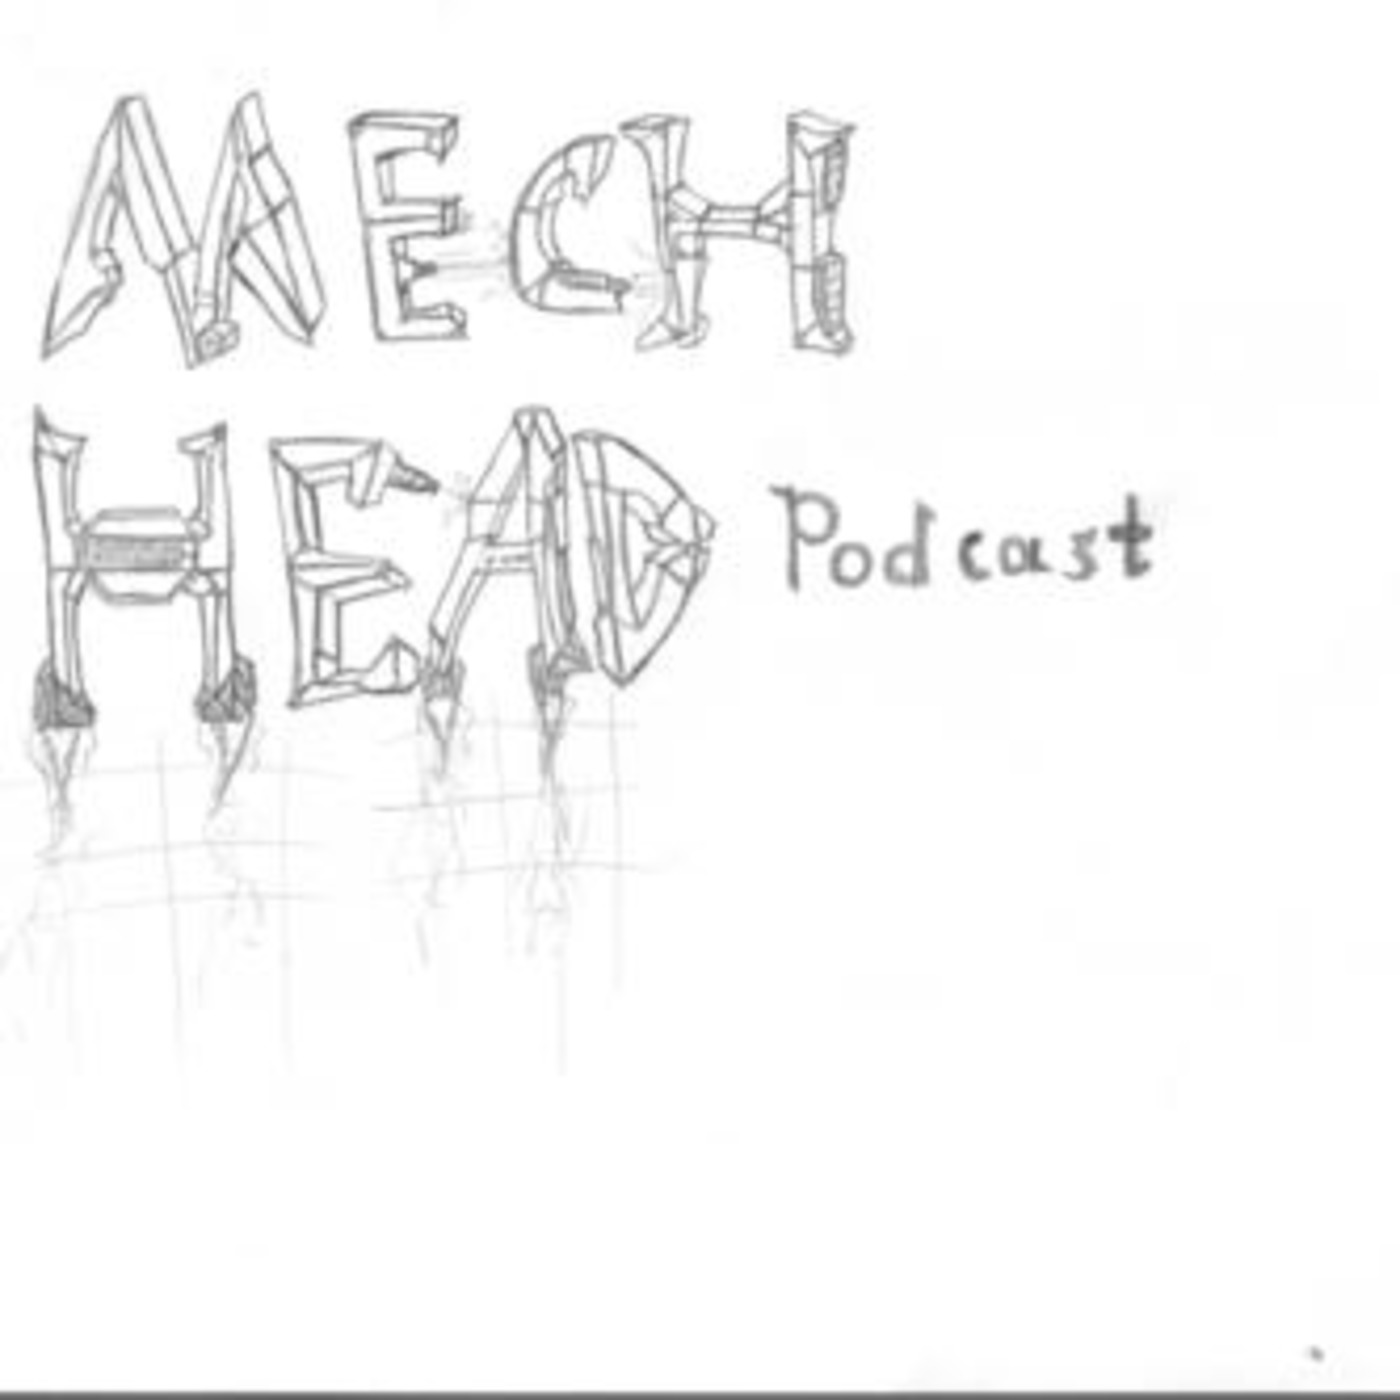 MechHead Podcast #32!